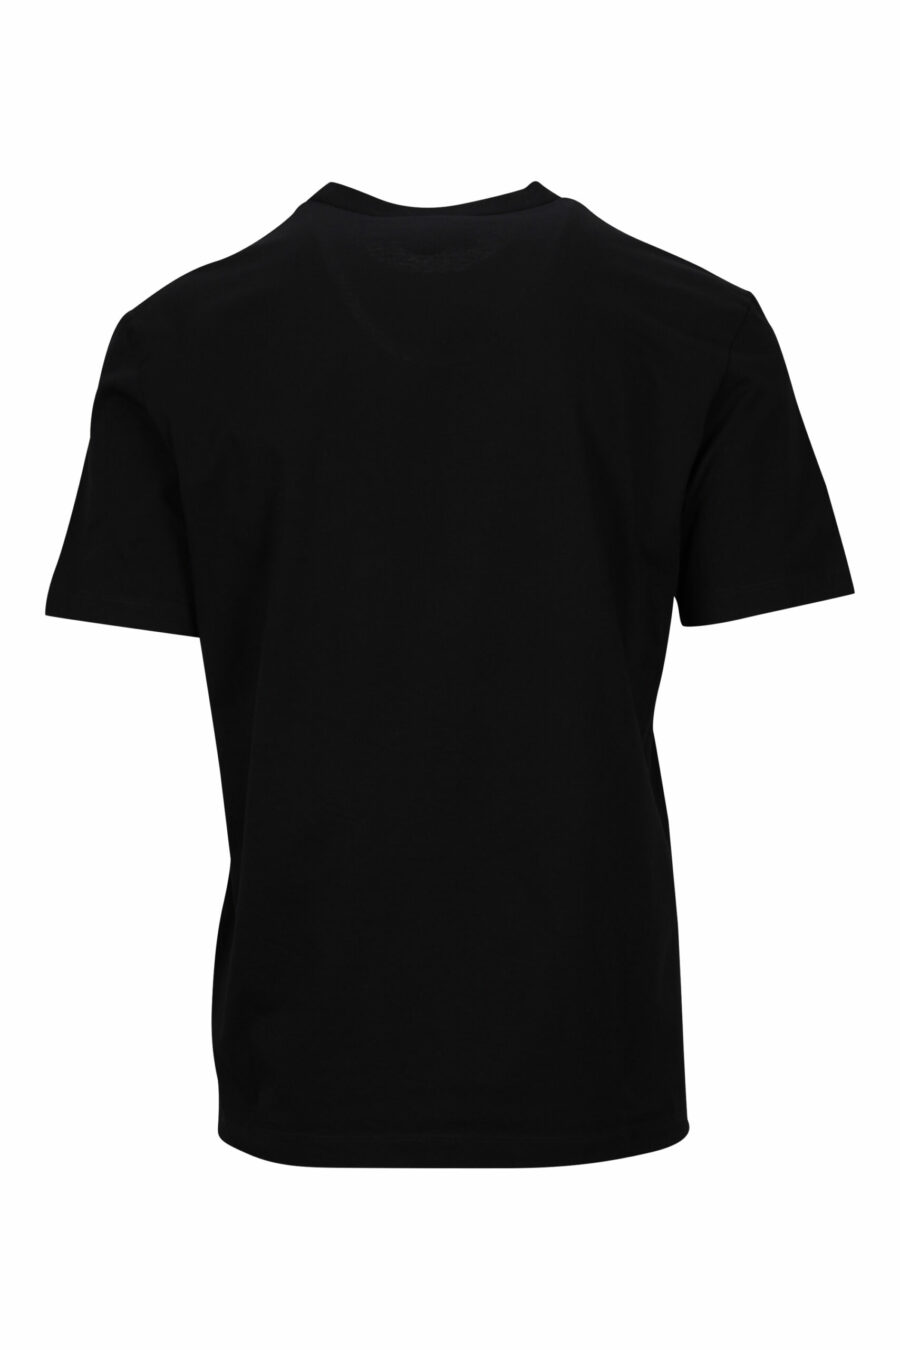 Black T-shirt with monochrome embossed maxilogo leaf - 8054148265908 1 scaled